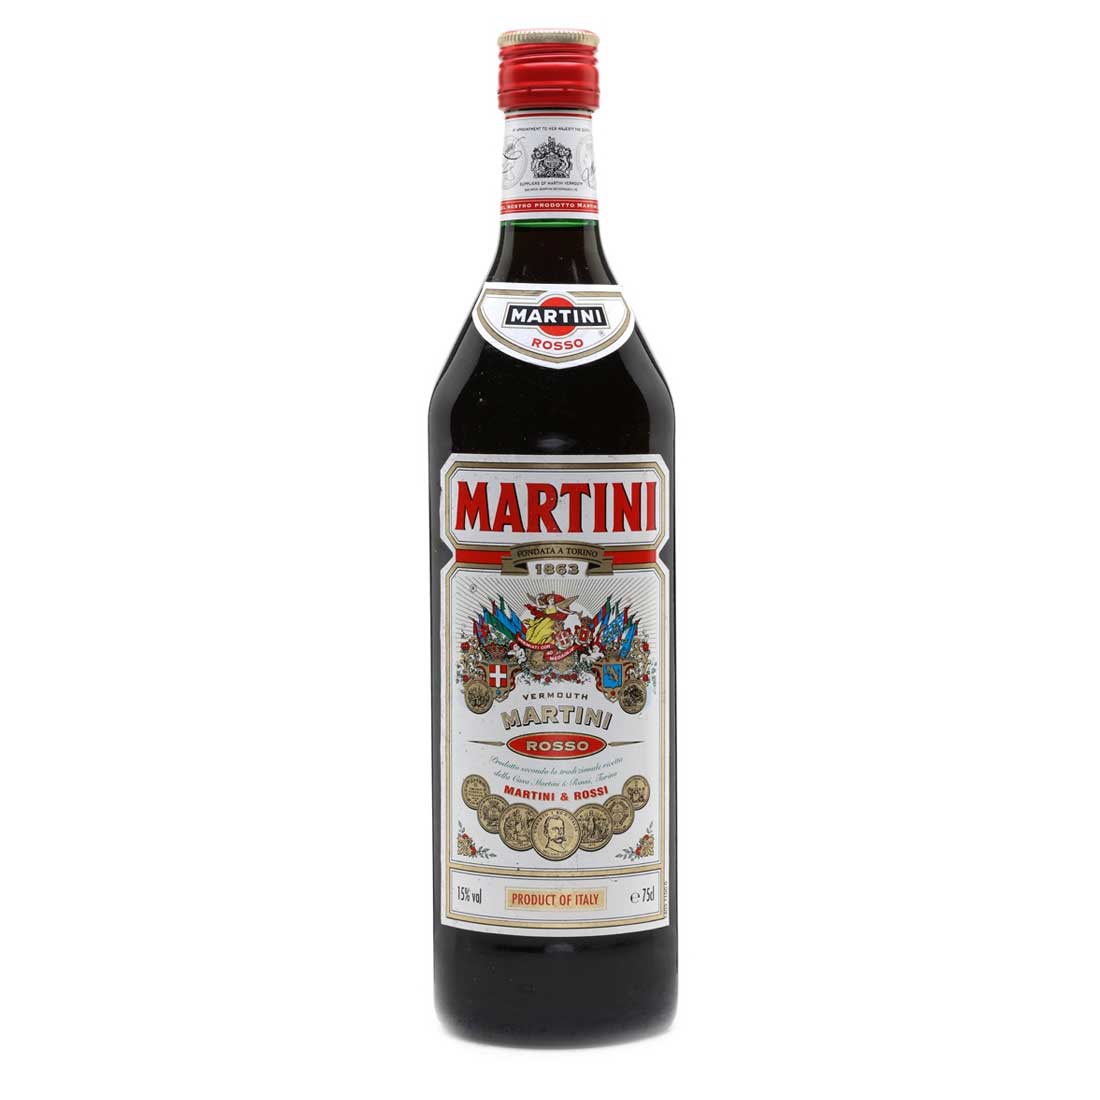 Martini nantes